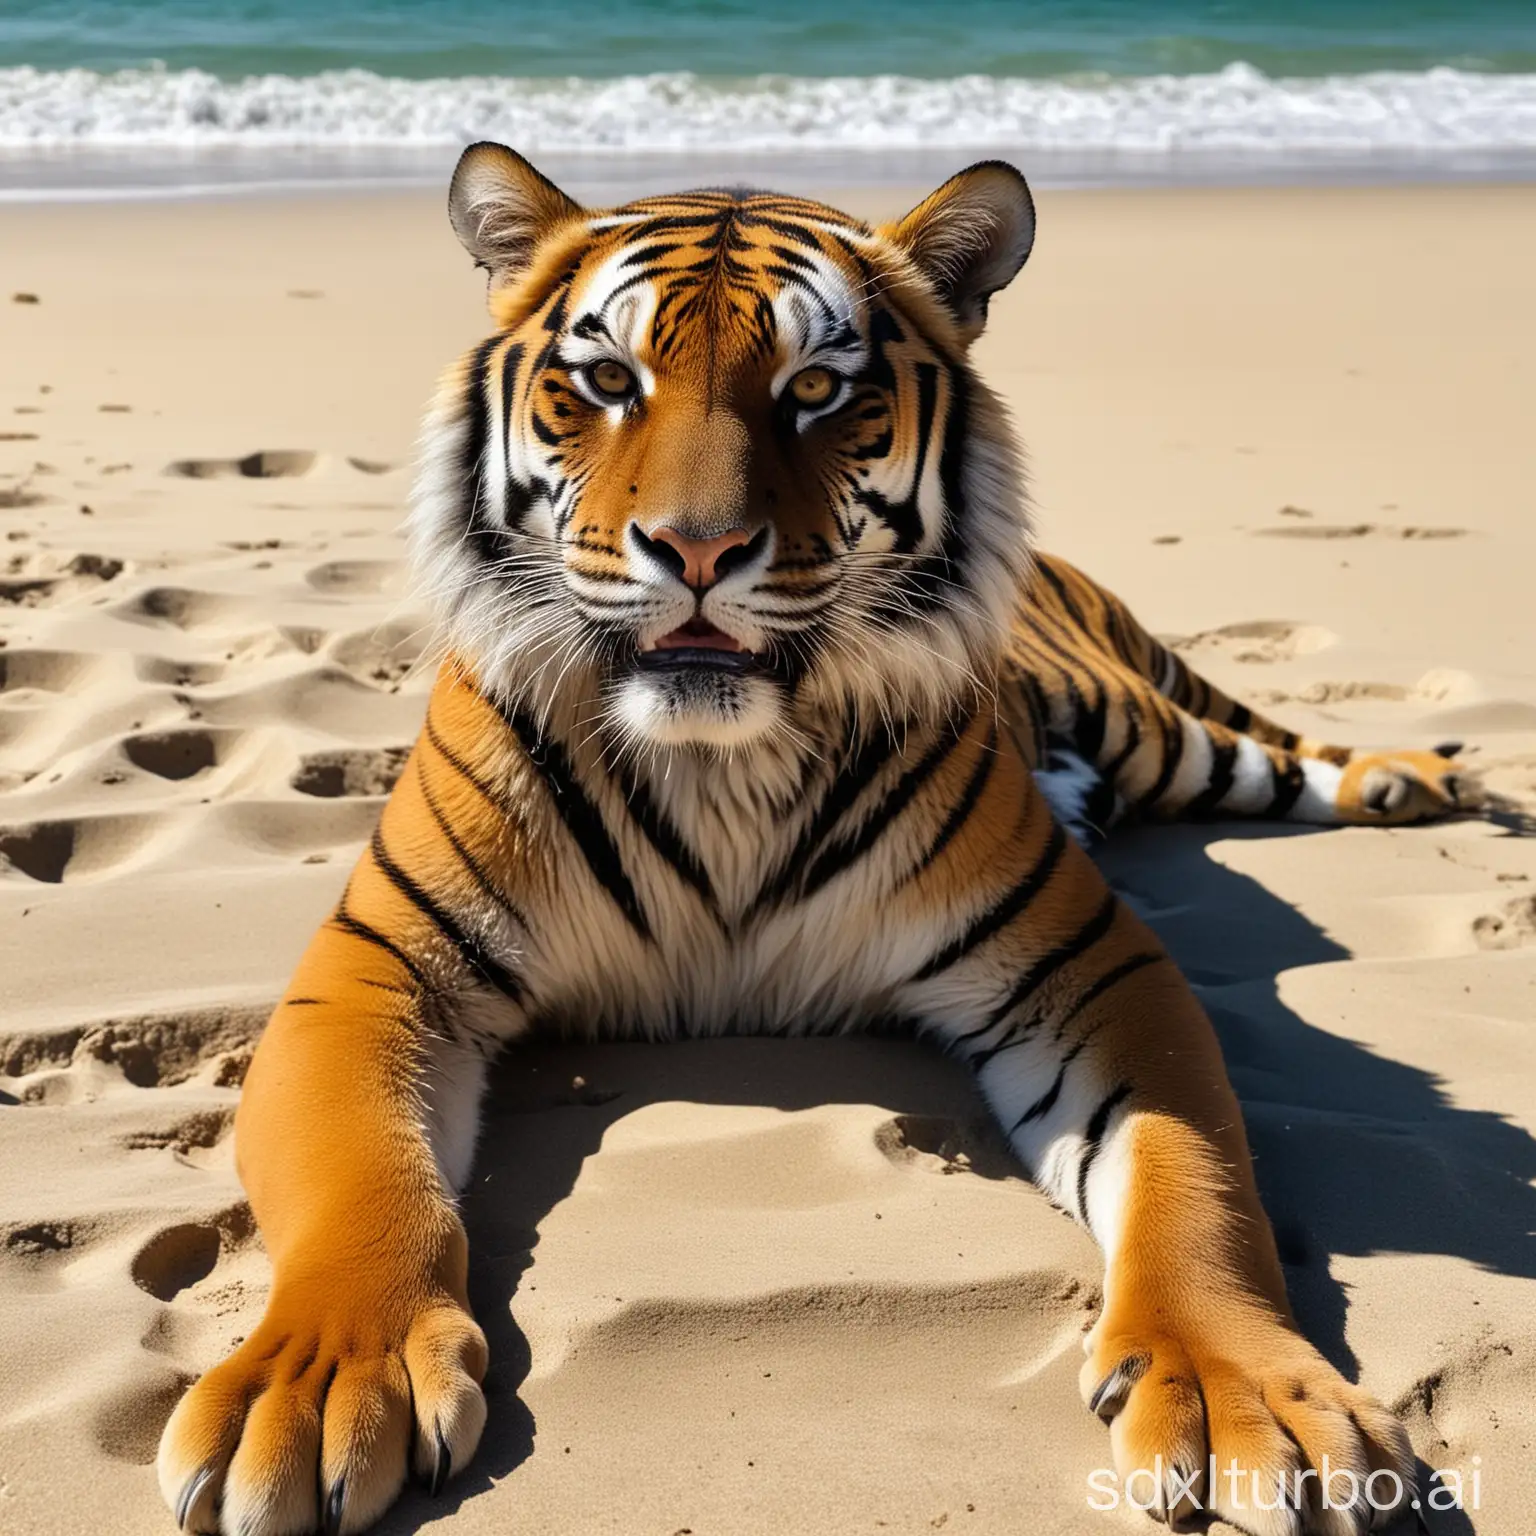 tiger having sun bath in beach wearing swimsuit